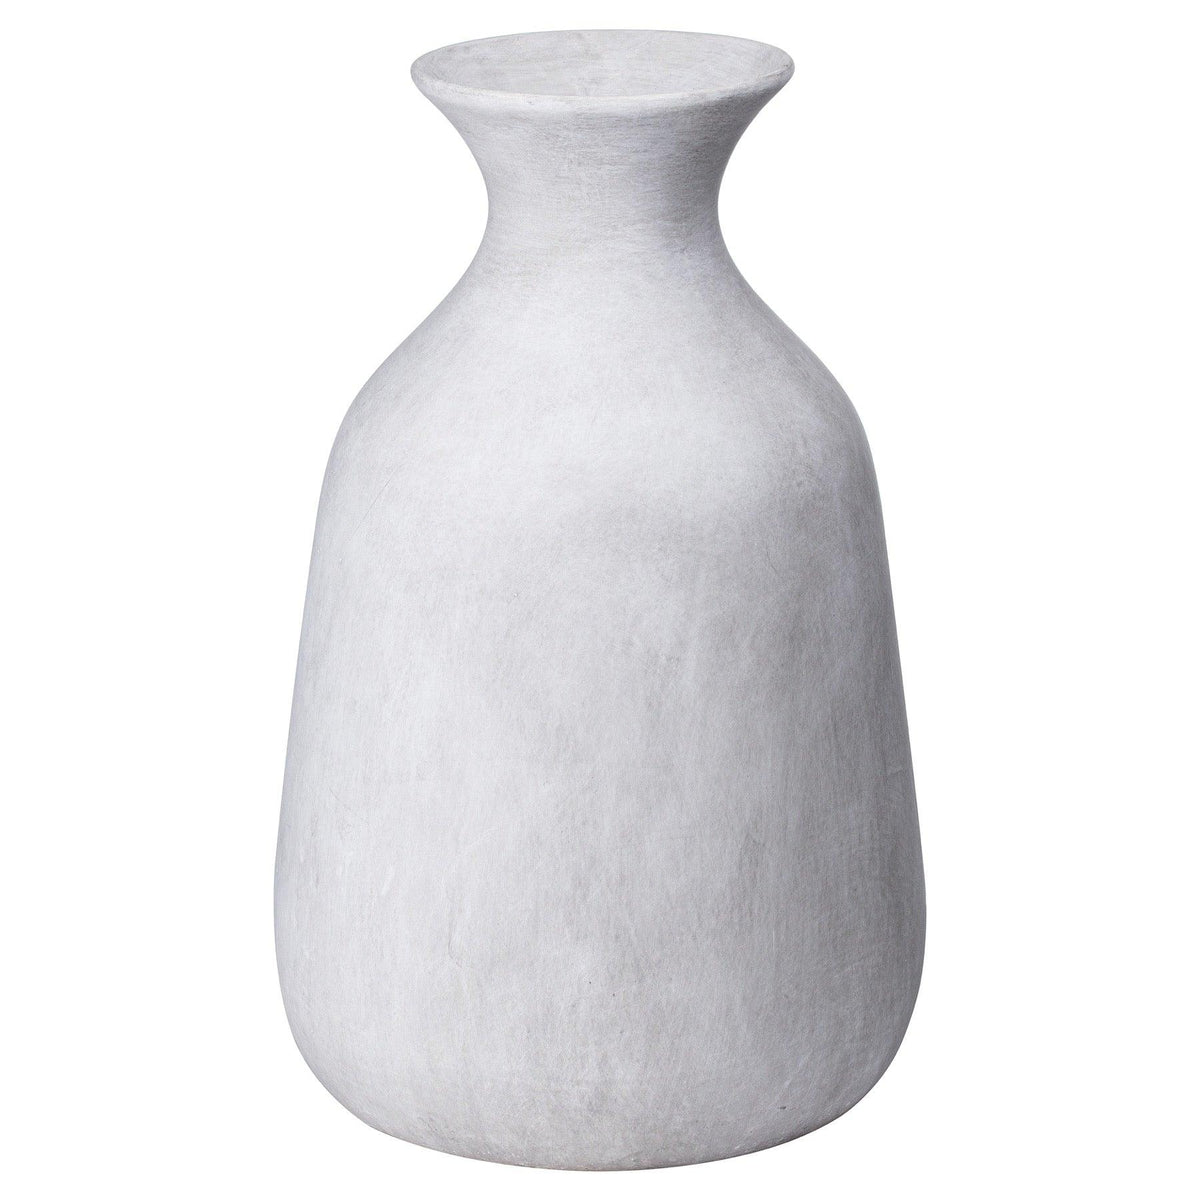 Darcy Ople Stone Vase - Vookoo Lifestyle